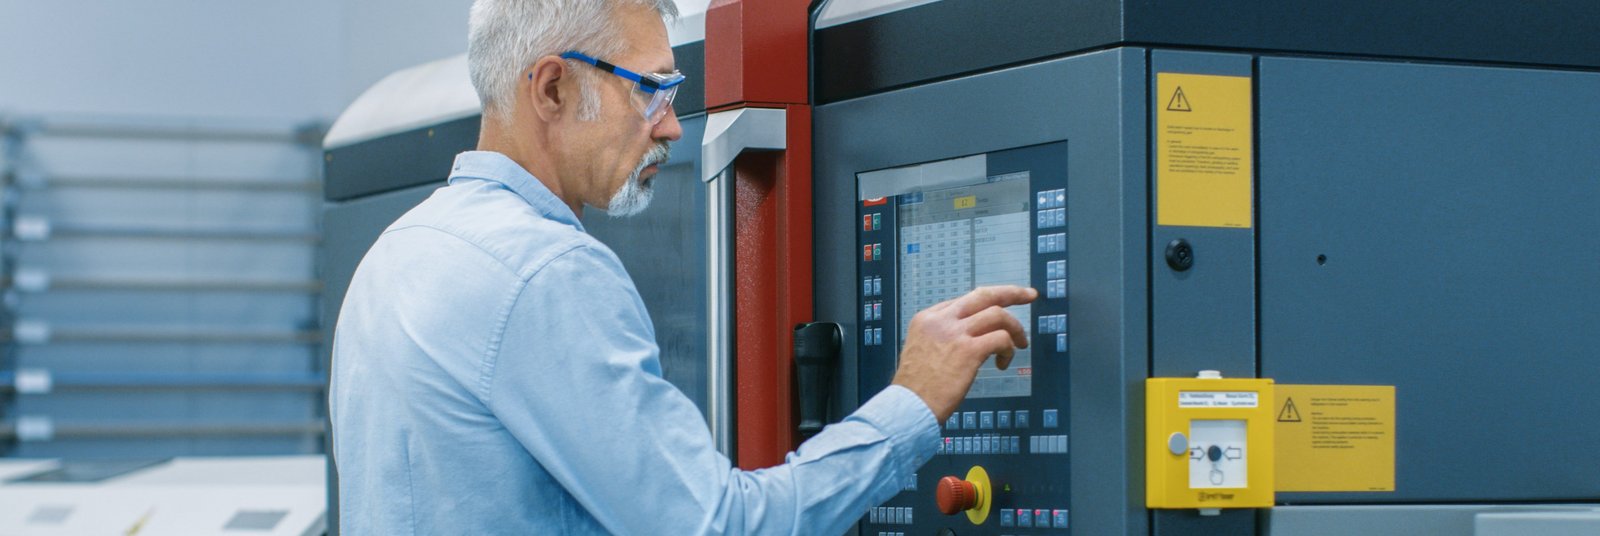 Ingenieur bedient Kontrollpanel an CNC-Maschine